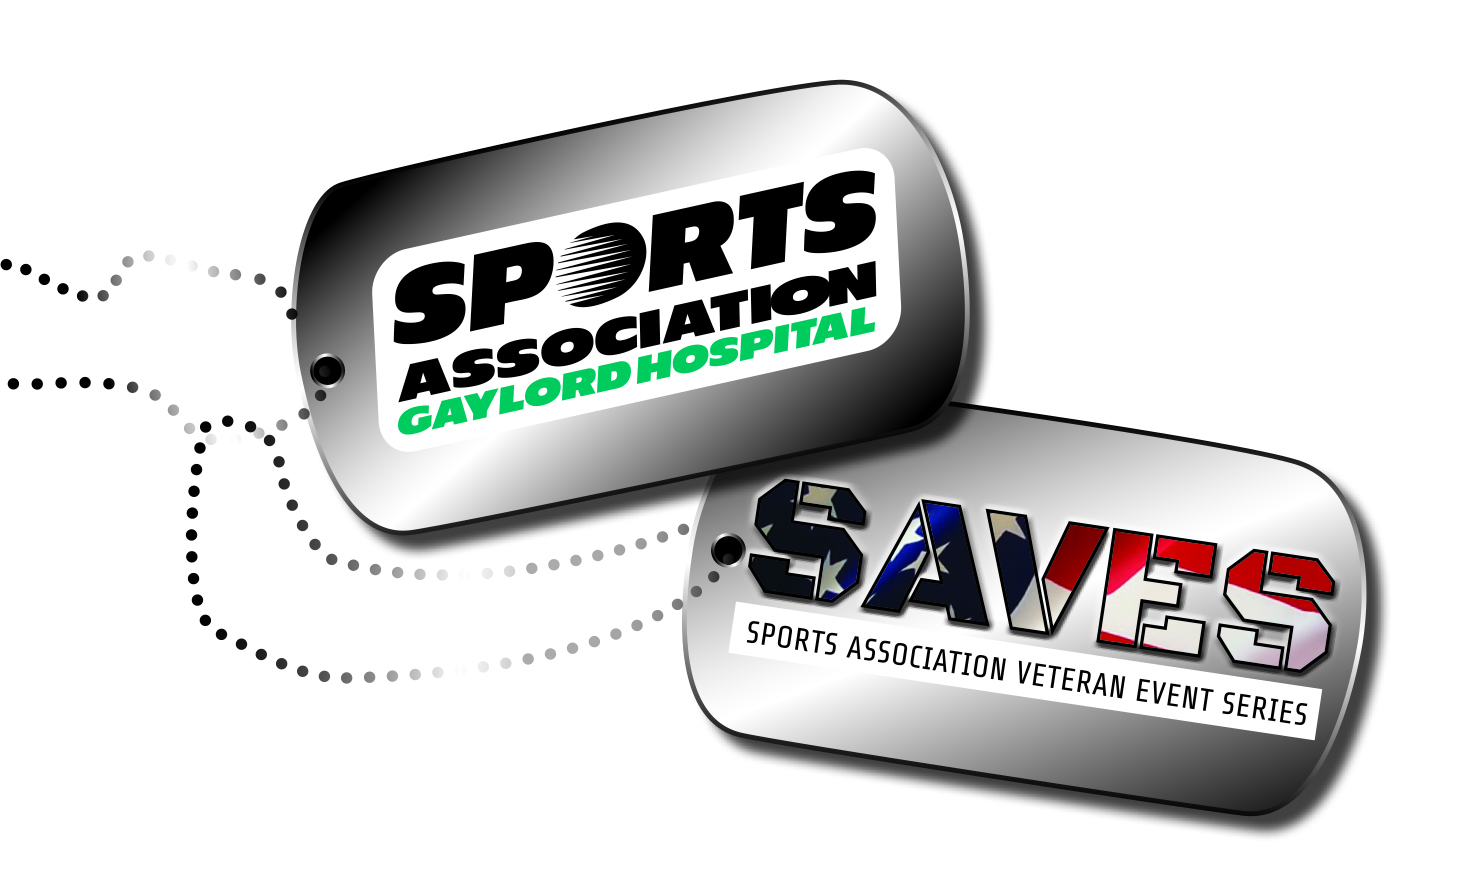 Sports Association logo and SAVES logo